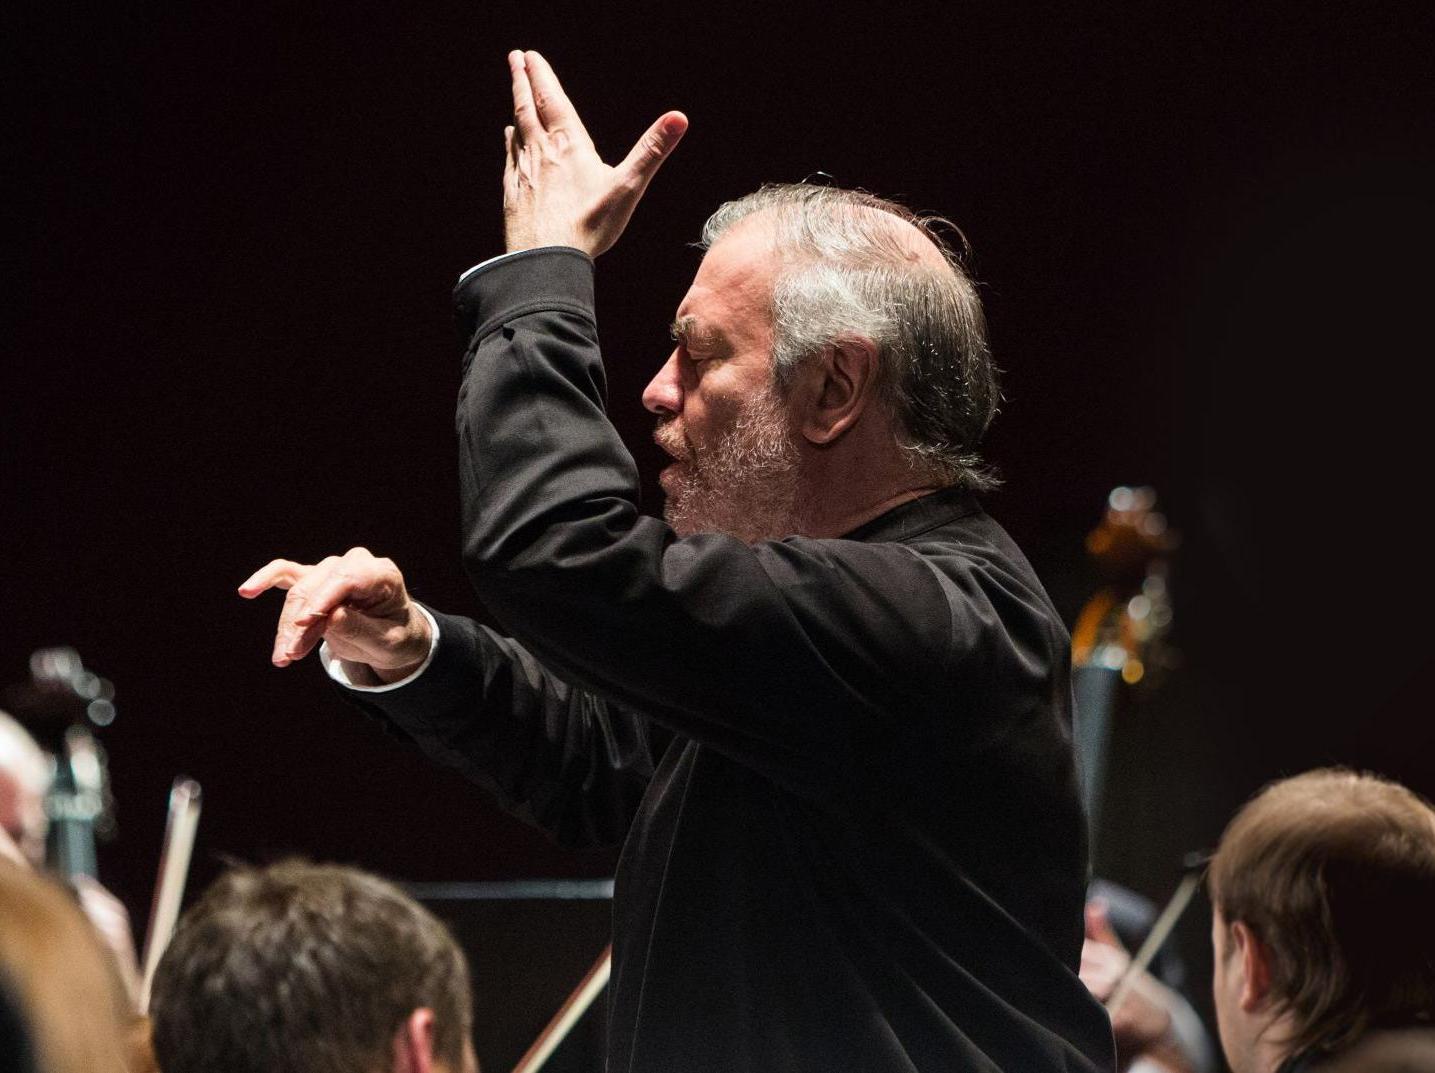 The Mariinsky Orchestra Conductor – Valery Gergiev